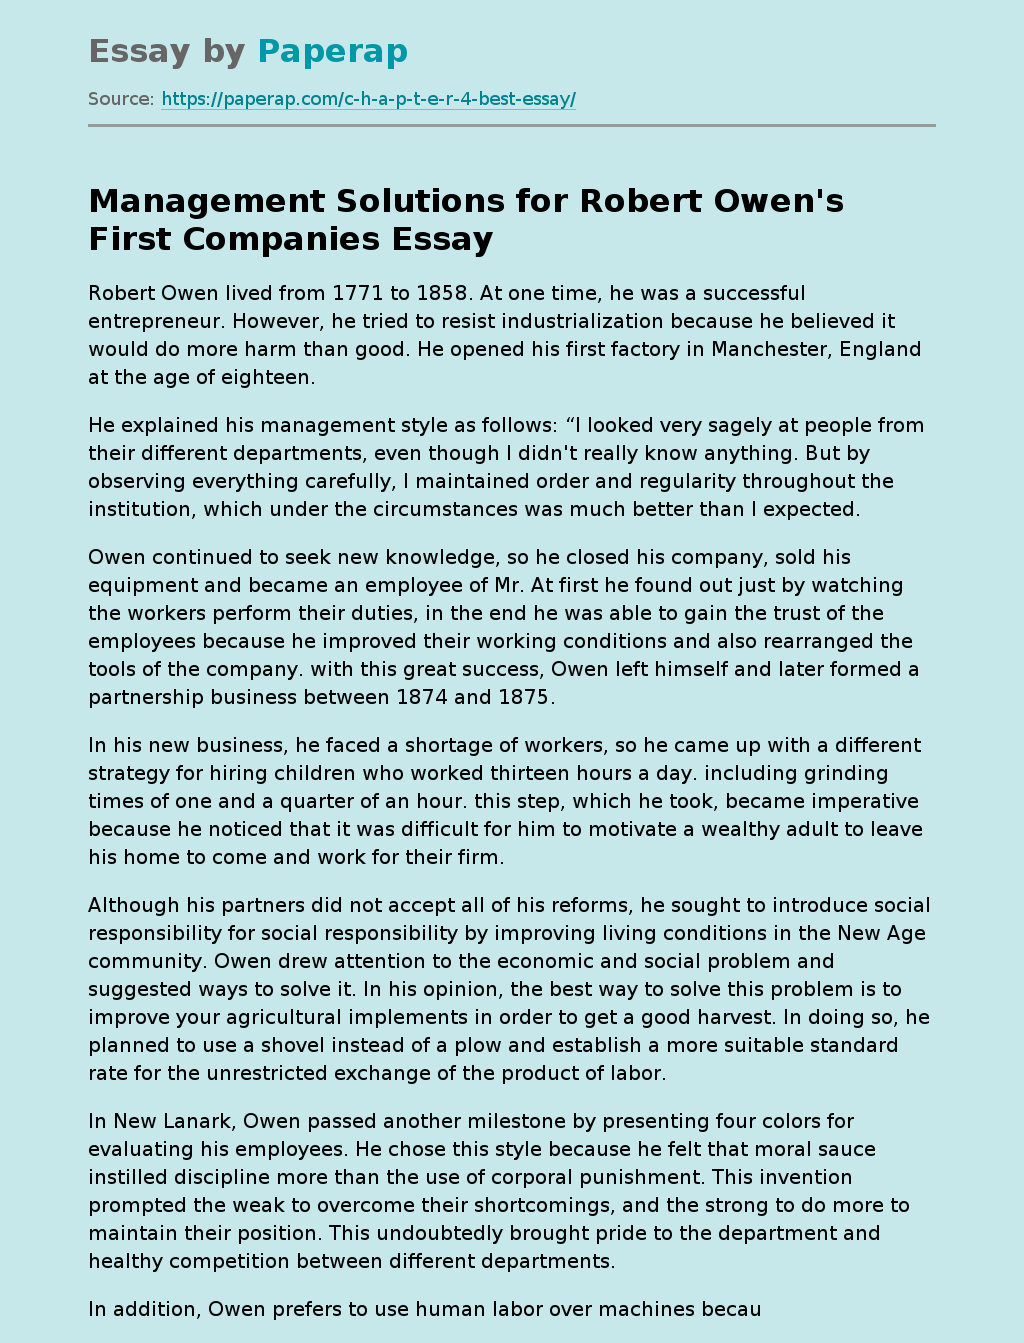 Management Solutions for Robert Owen's First Companies